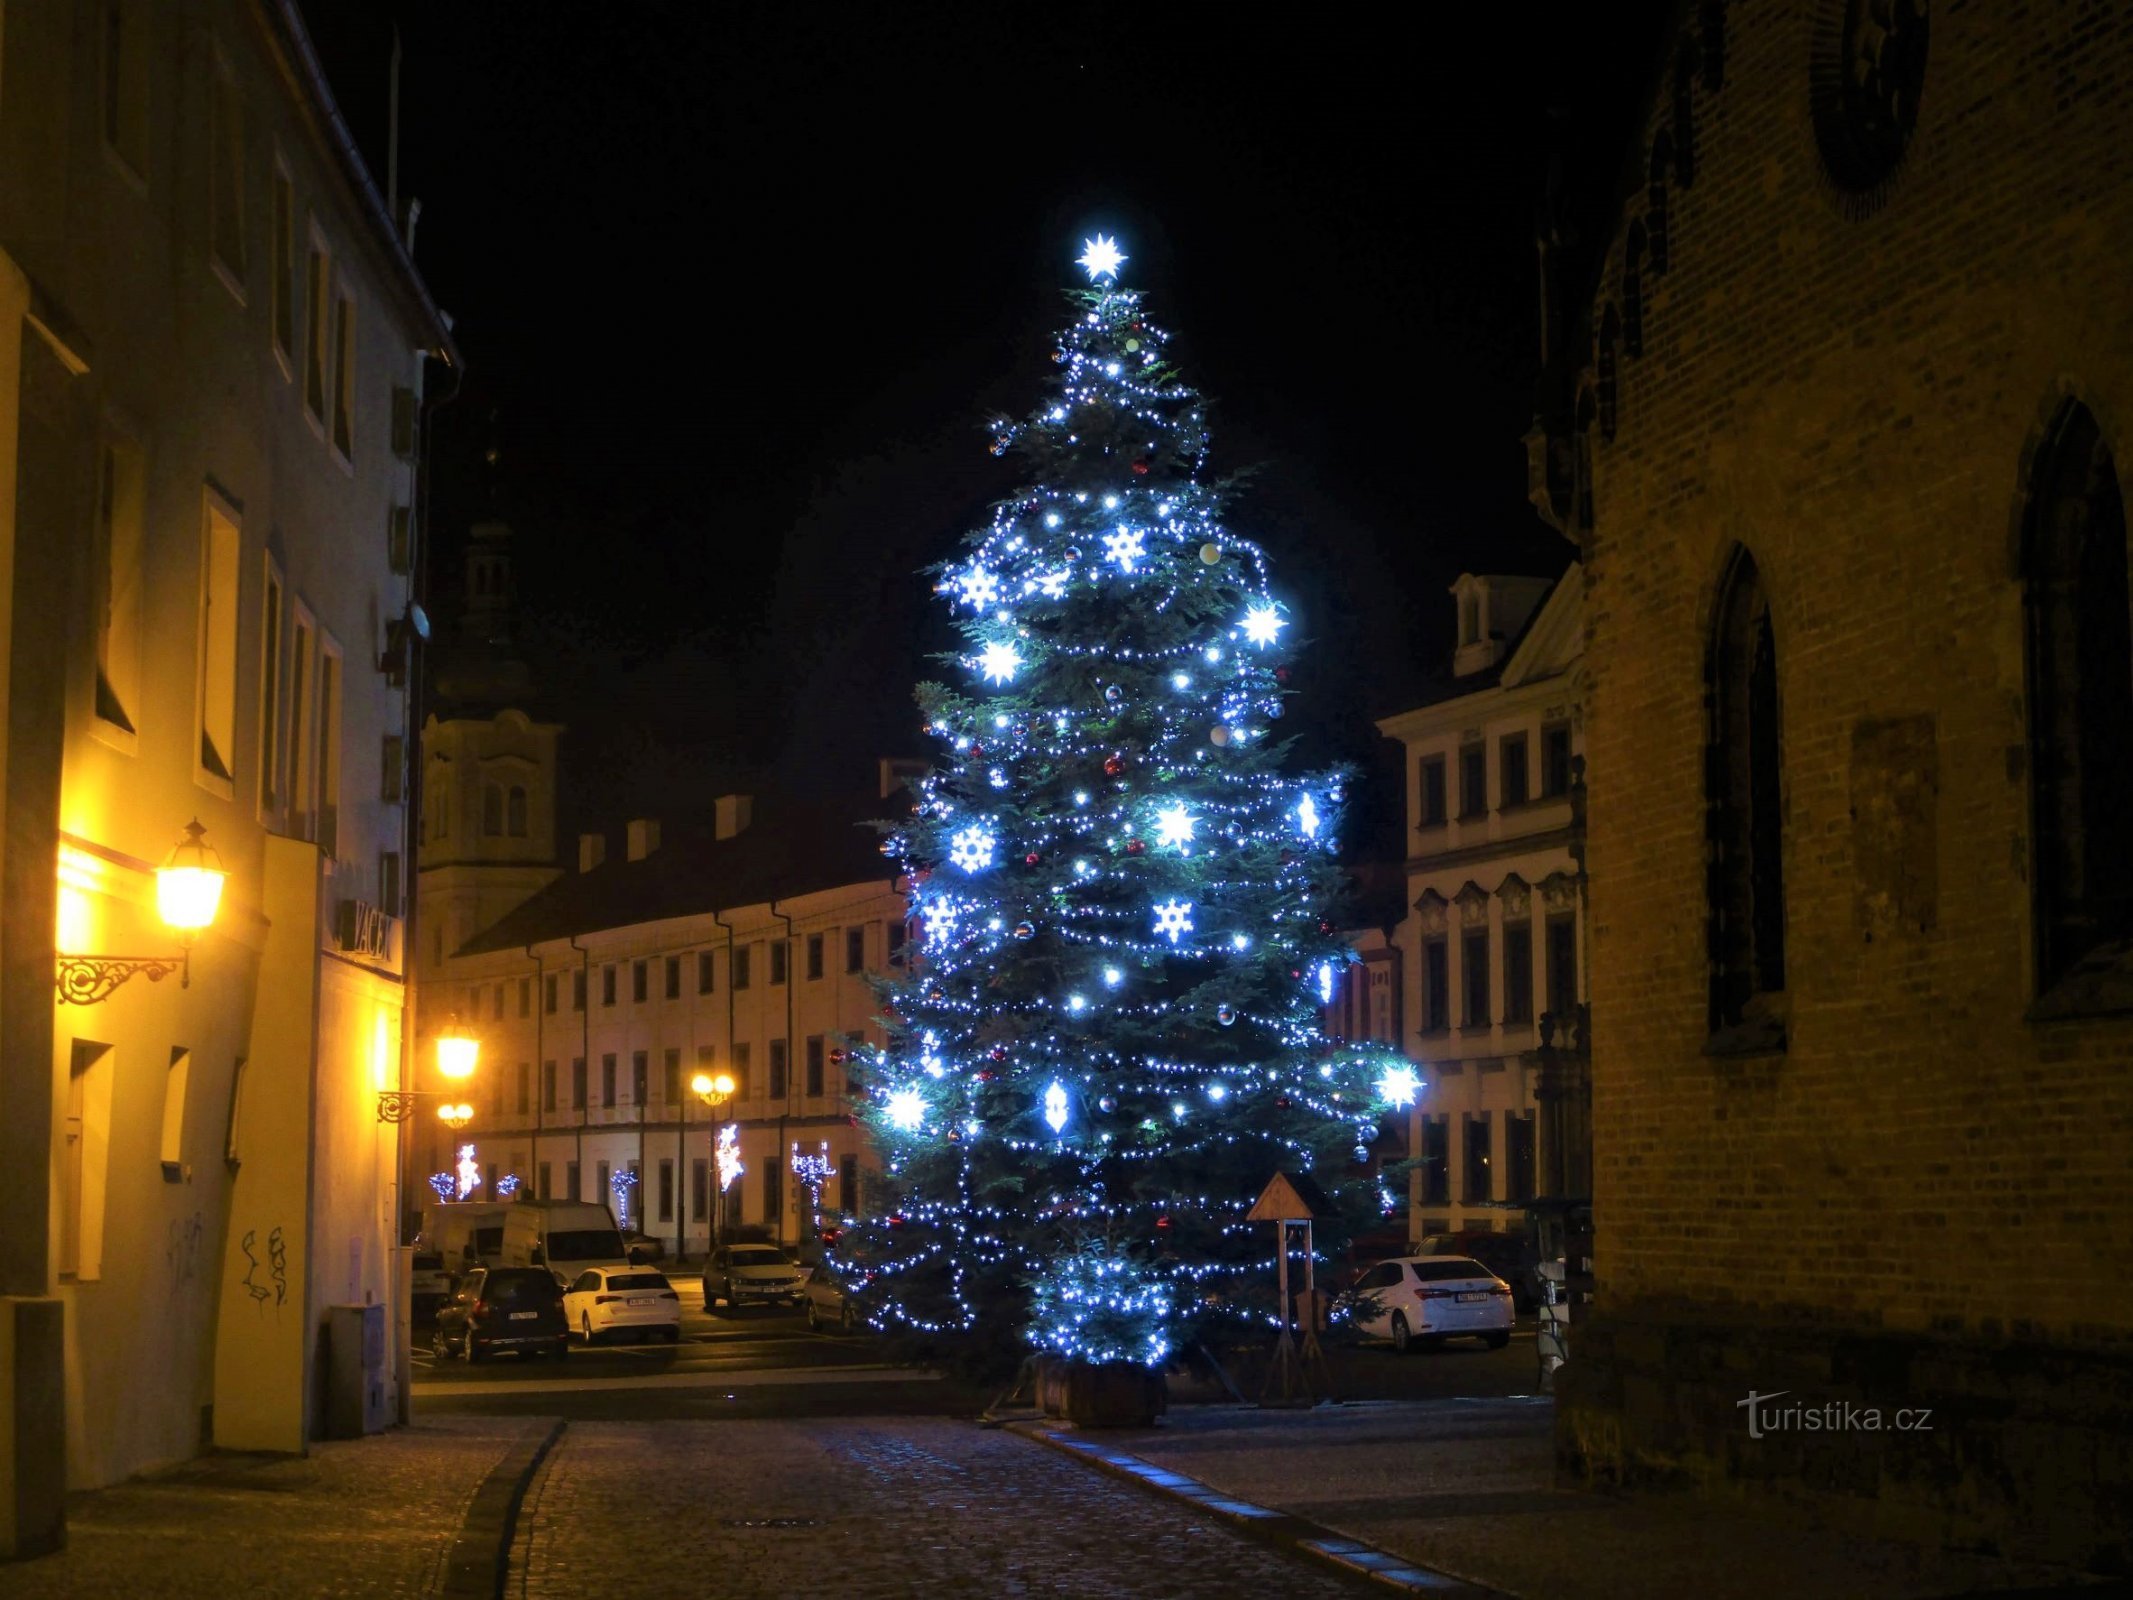 Juletræ på Den Store Plads (Hradec Králové, 17.12.2021/XNUMX/XNUMX)